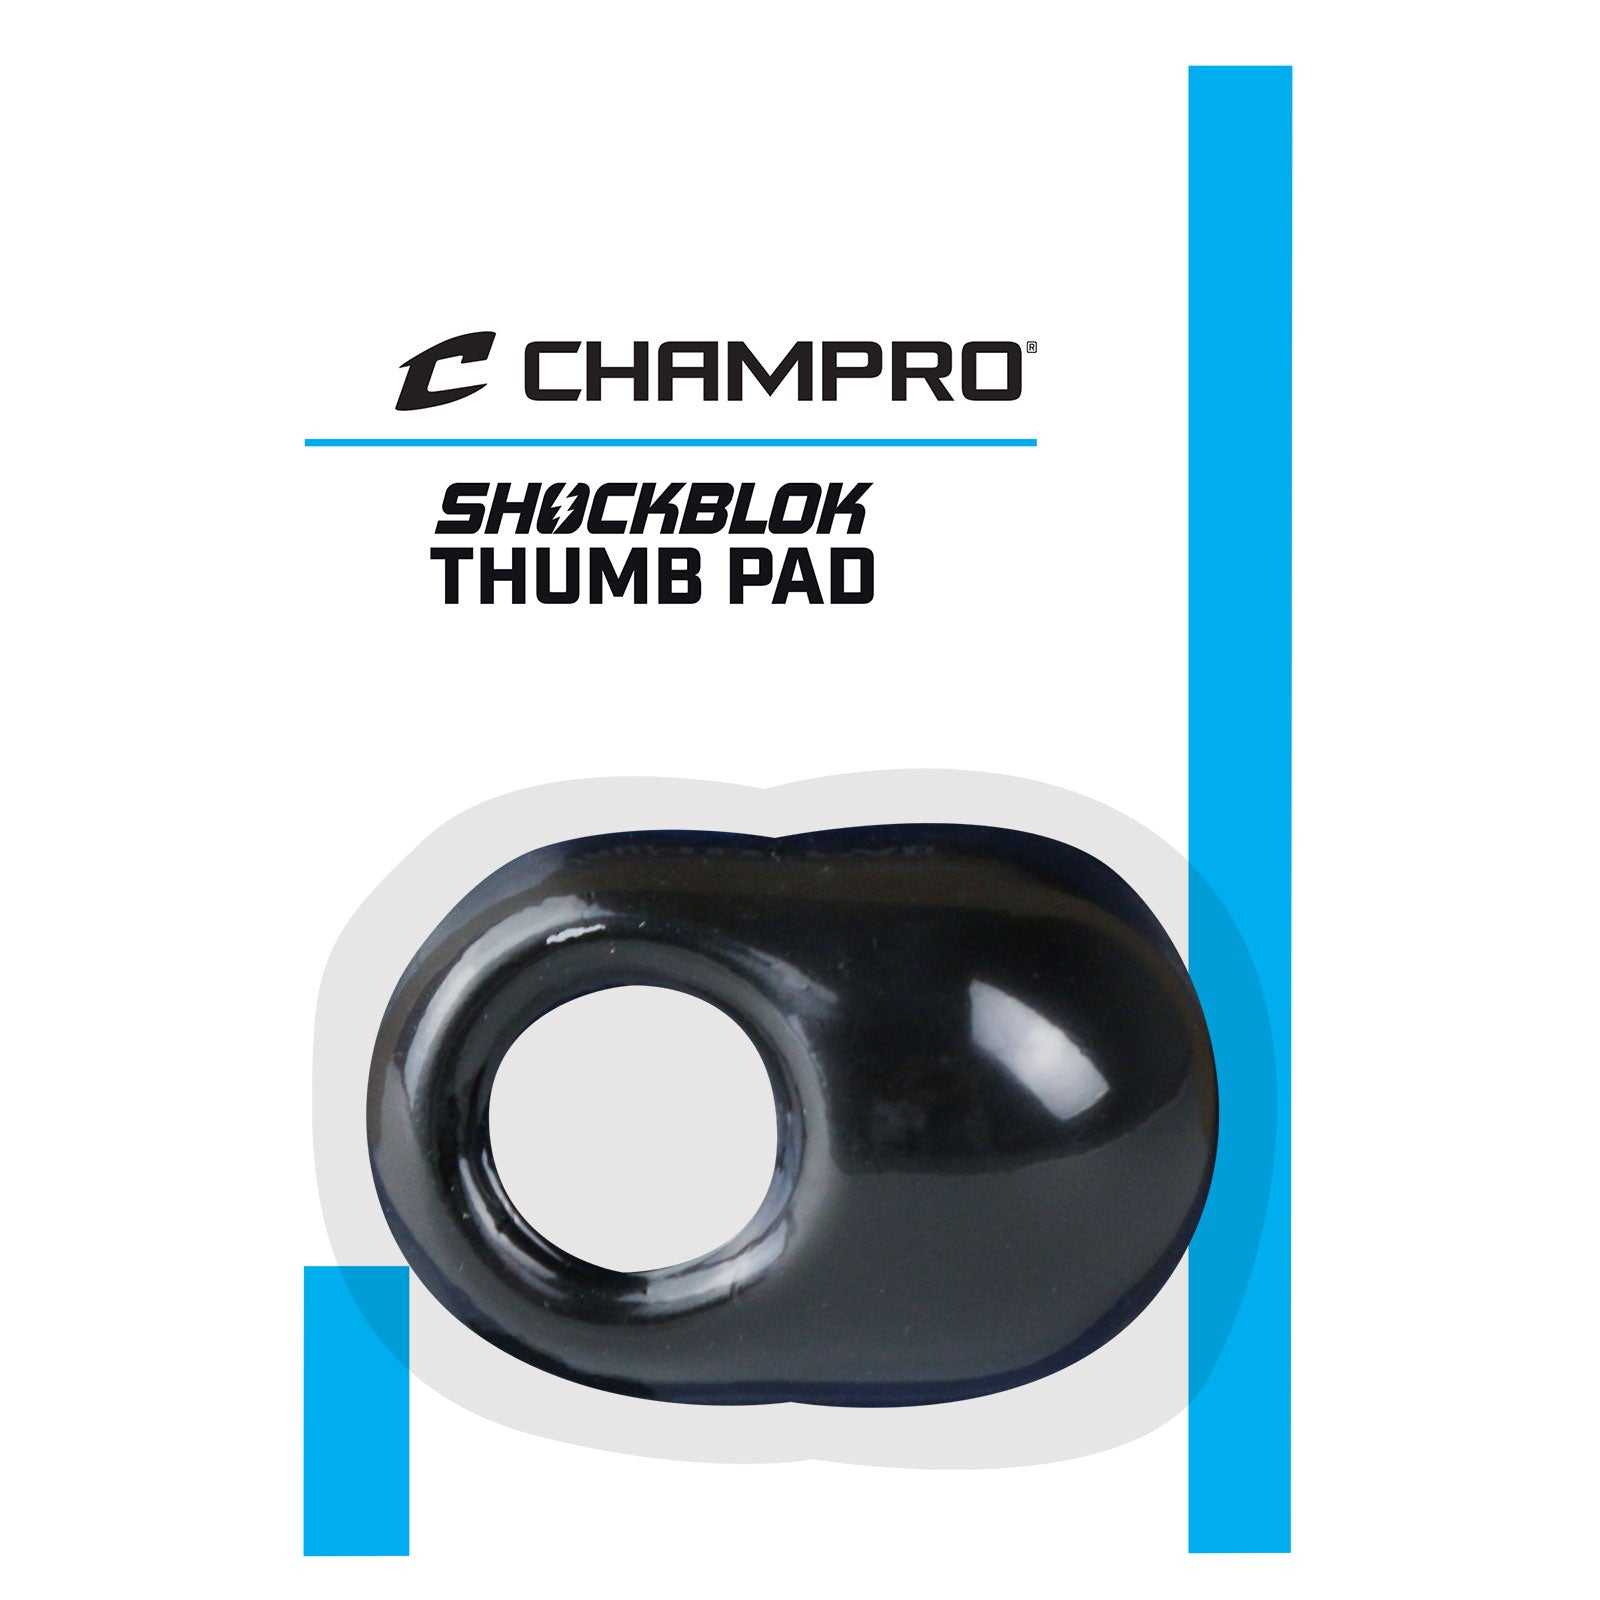 Champro A036 Shockblok Thumb Pad - HIT a Double